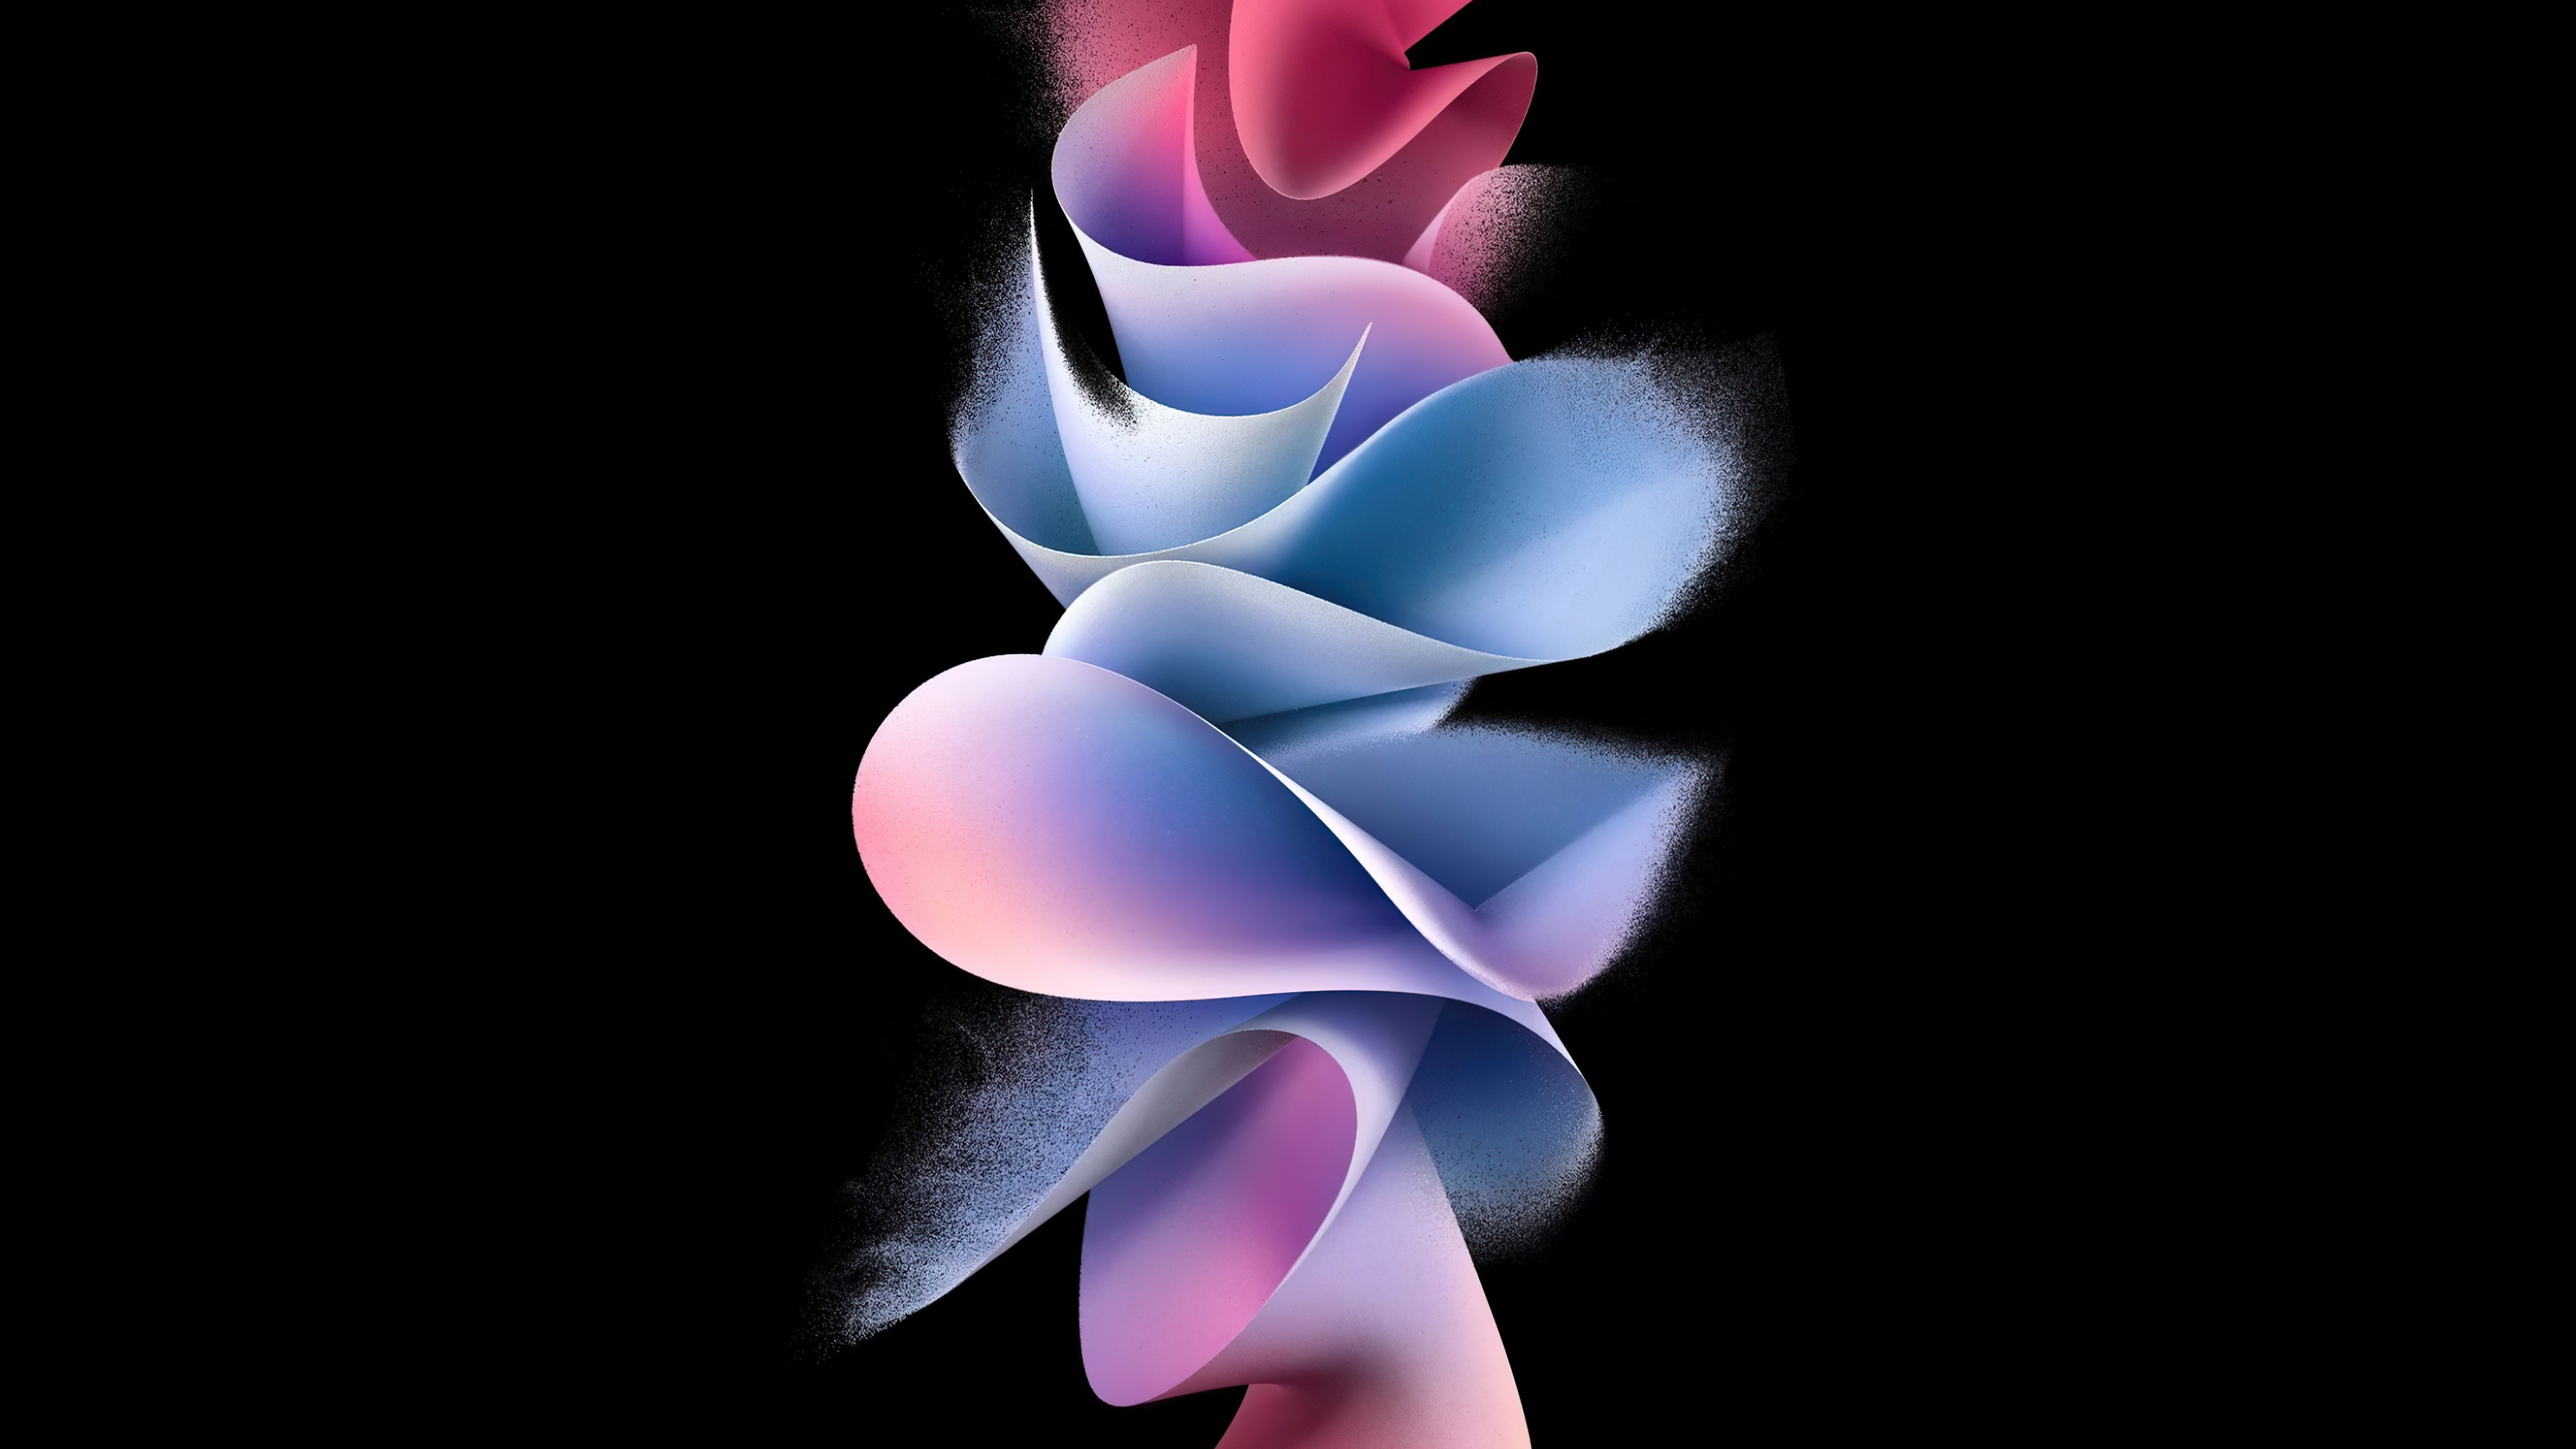 Insane abstract beauty on Samsung Galaxy Z Flip 3 wallpaper 3840x2160